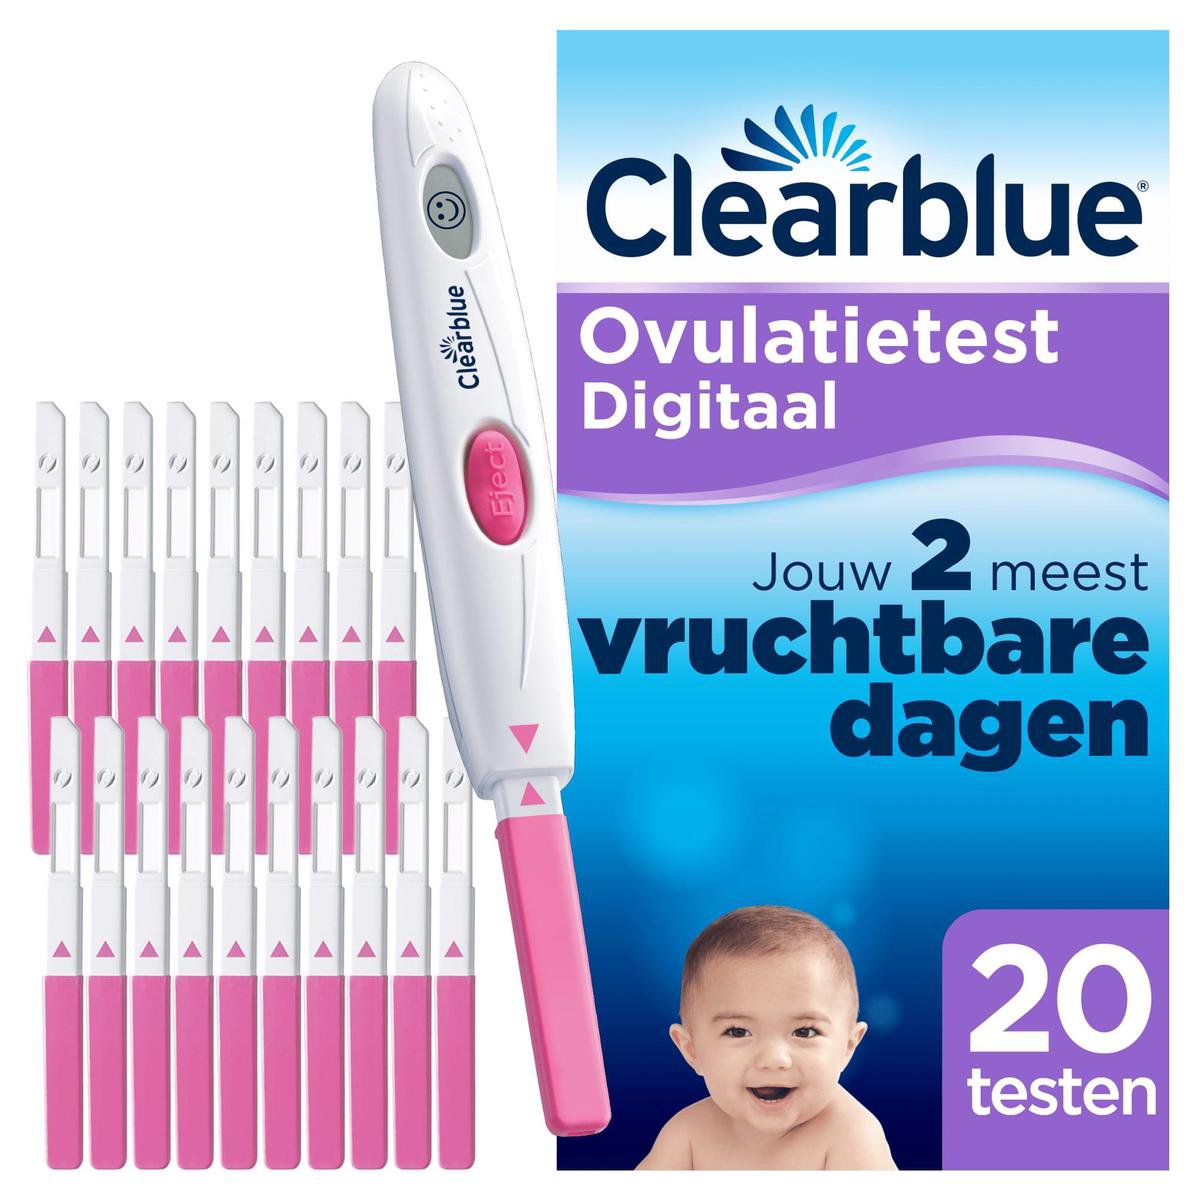 Clearblue Ovulatietest Set Digitaal - 1 digitale houder en 20 testen - Clearblue